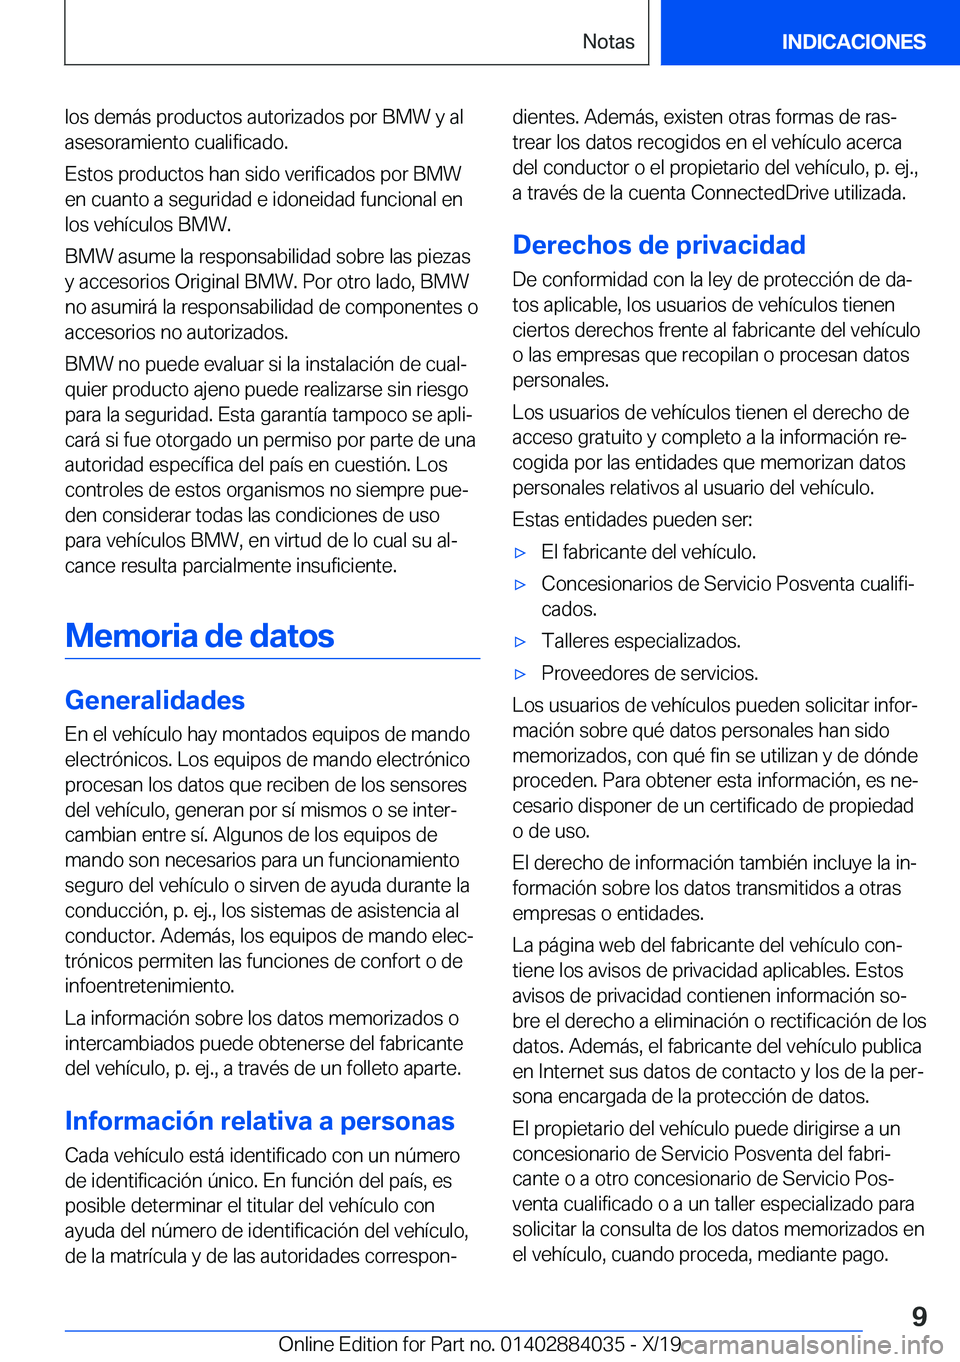 BMW 7 SERIES 2020  Manuales de Empleo (in Spanish) �l�o�s��d�e�m�